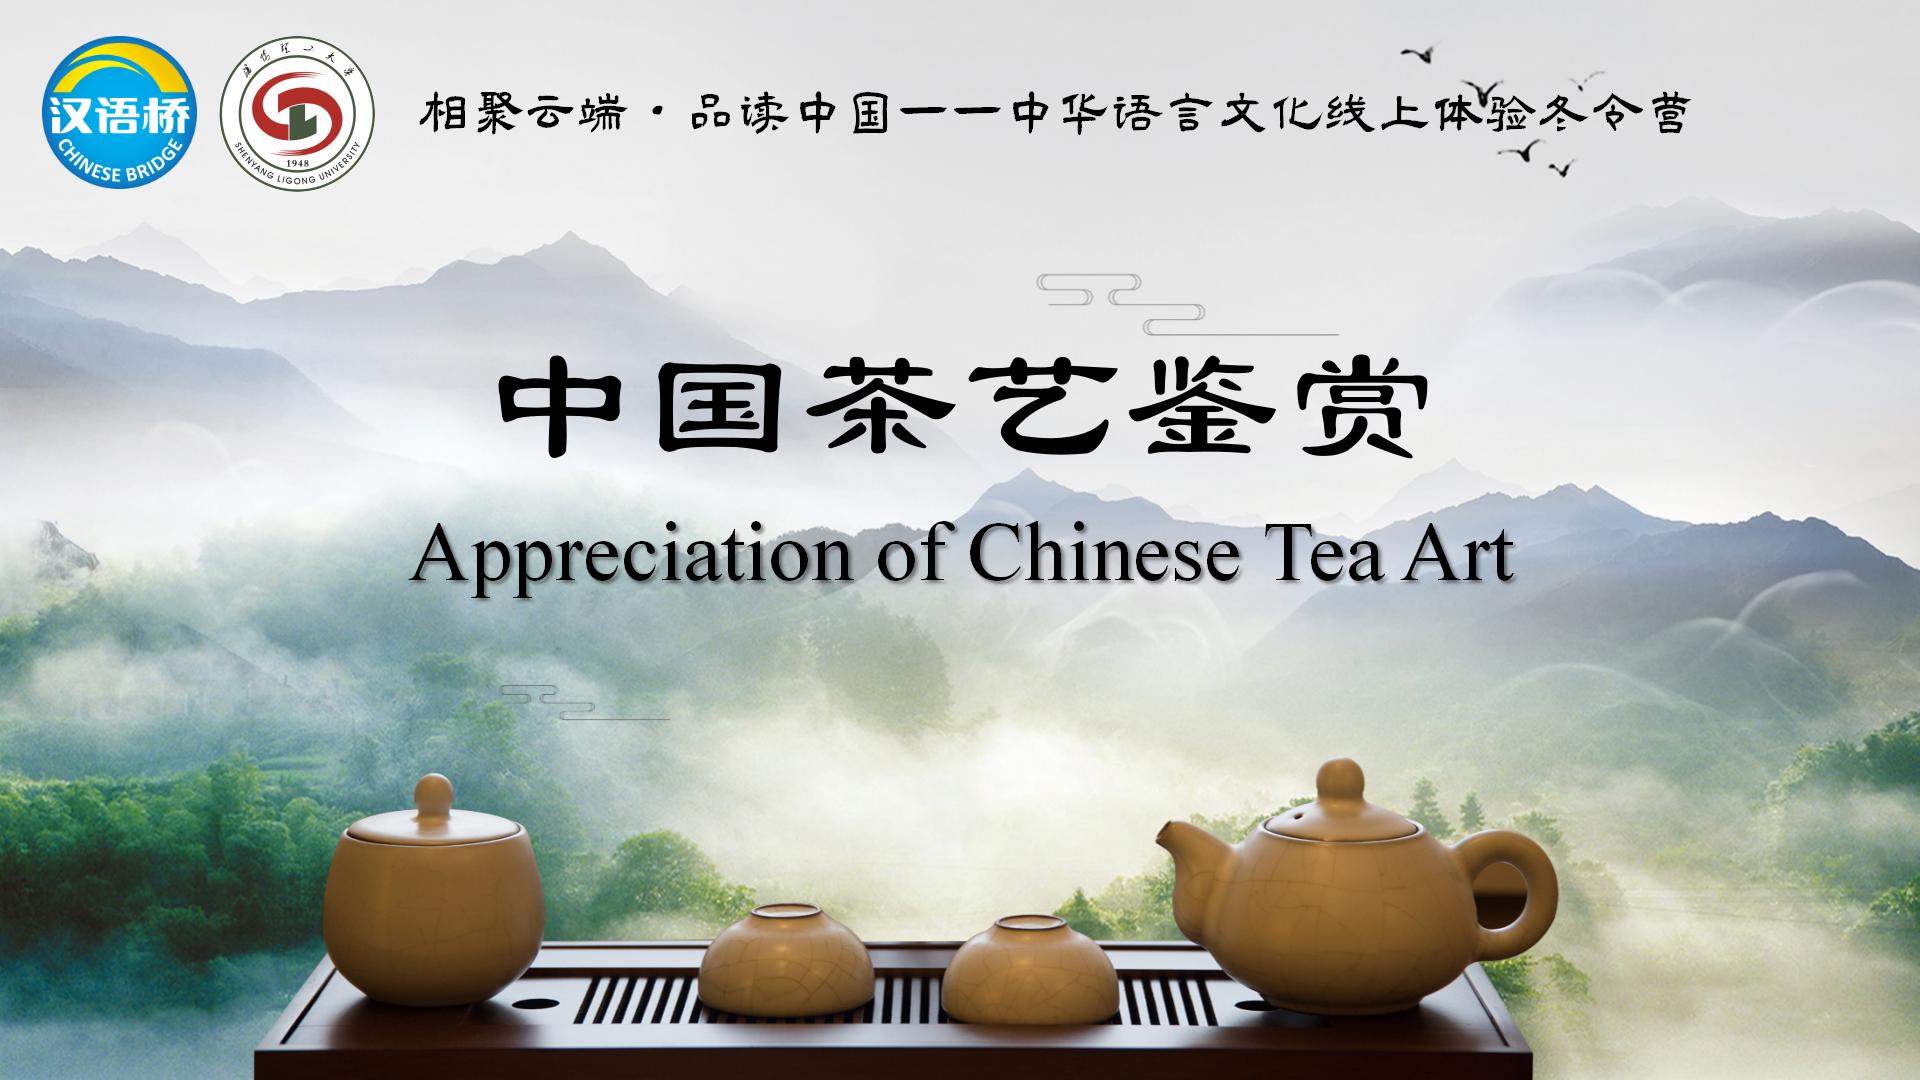 Appreciation of Chinese Tea Art